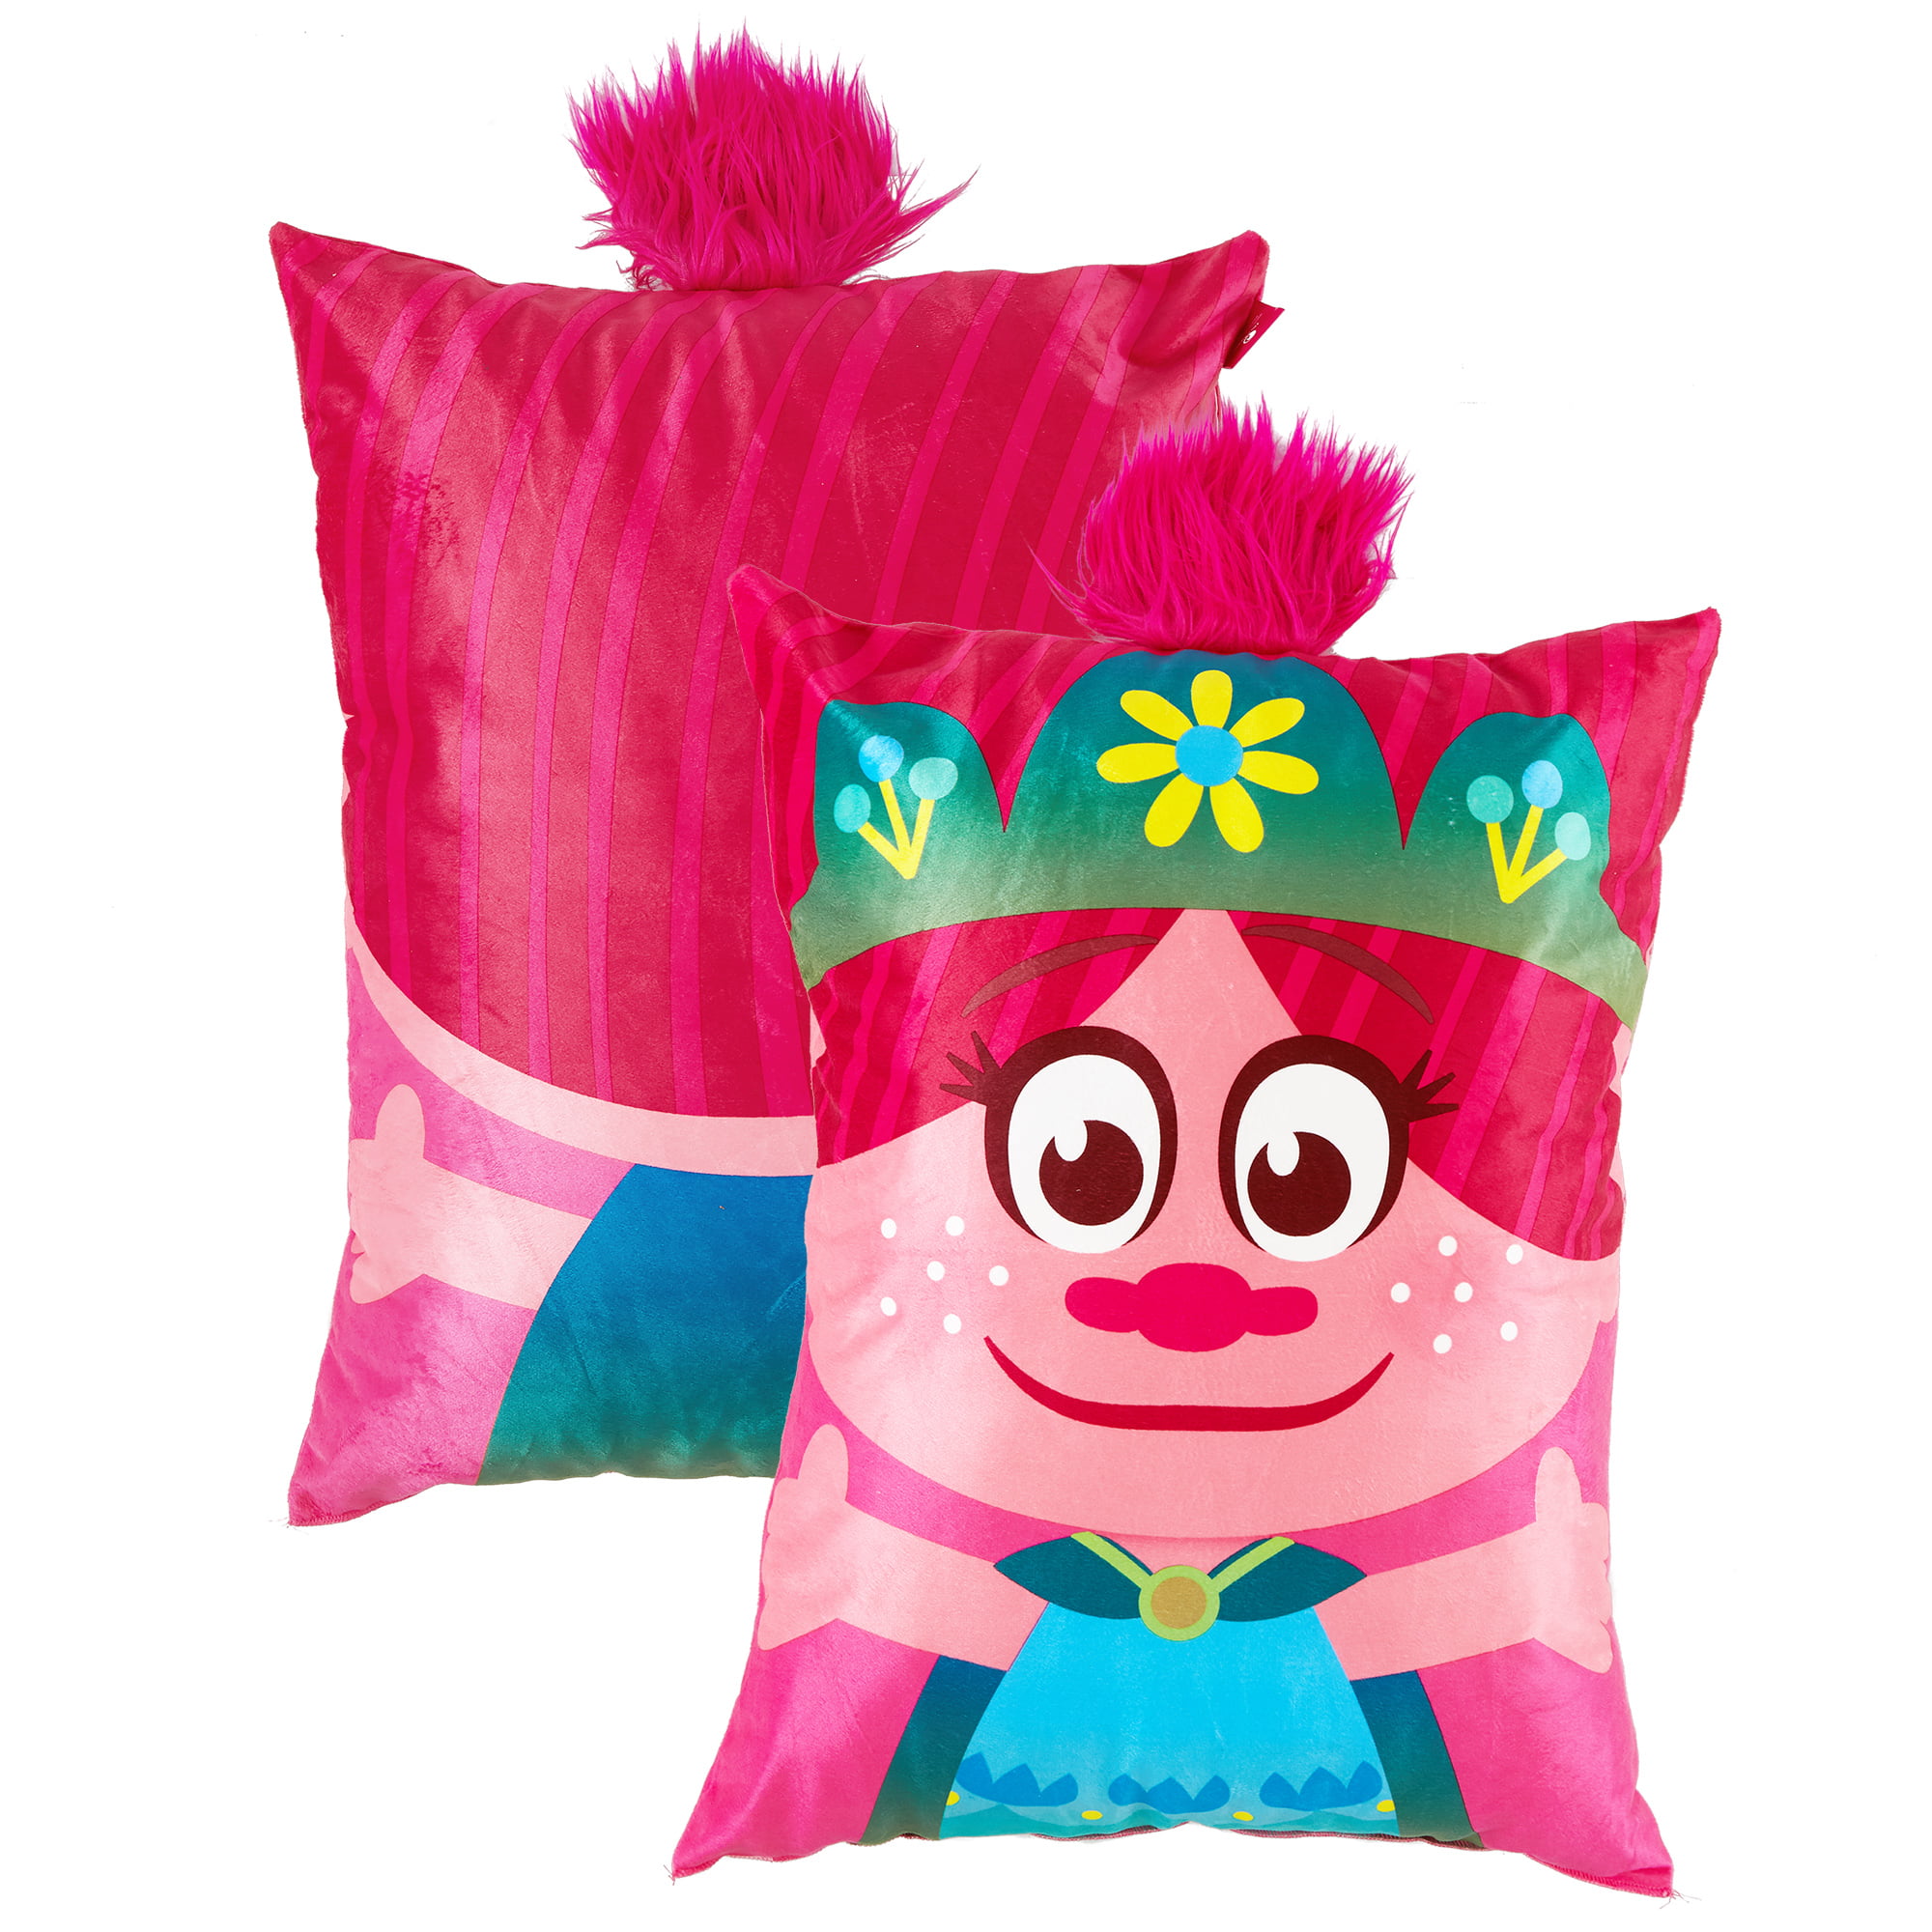 New Dreamworks Trolls Colour Your Own Cushion Pillow Girls Kids Art Toy Gift 